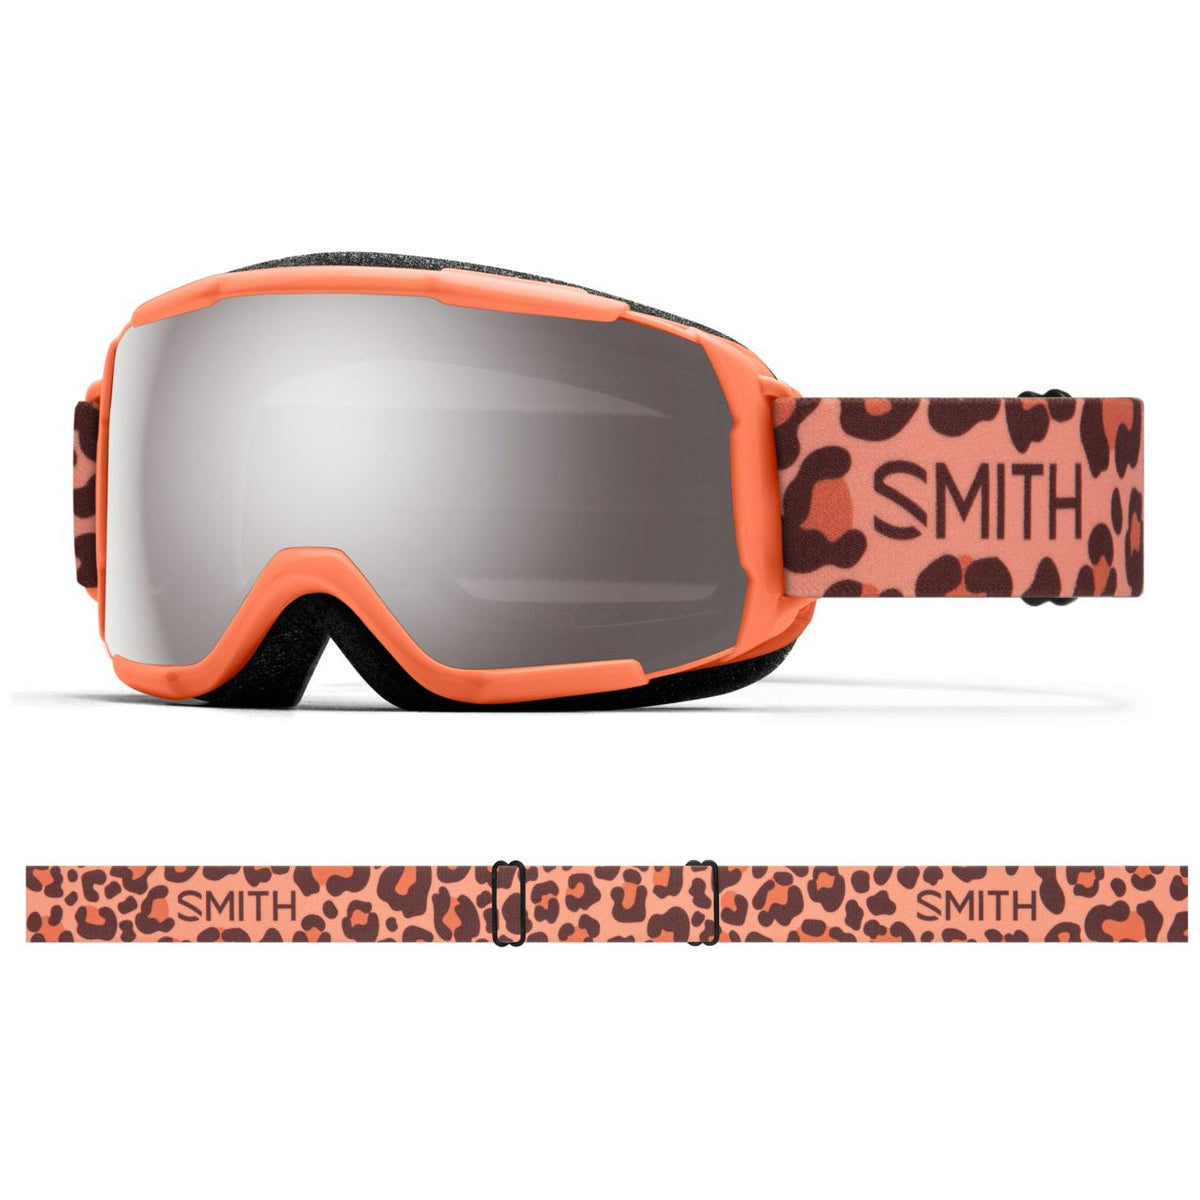 Smith Optics Grom Snow Goggles